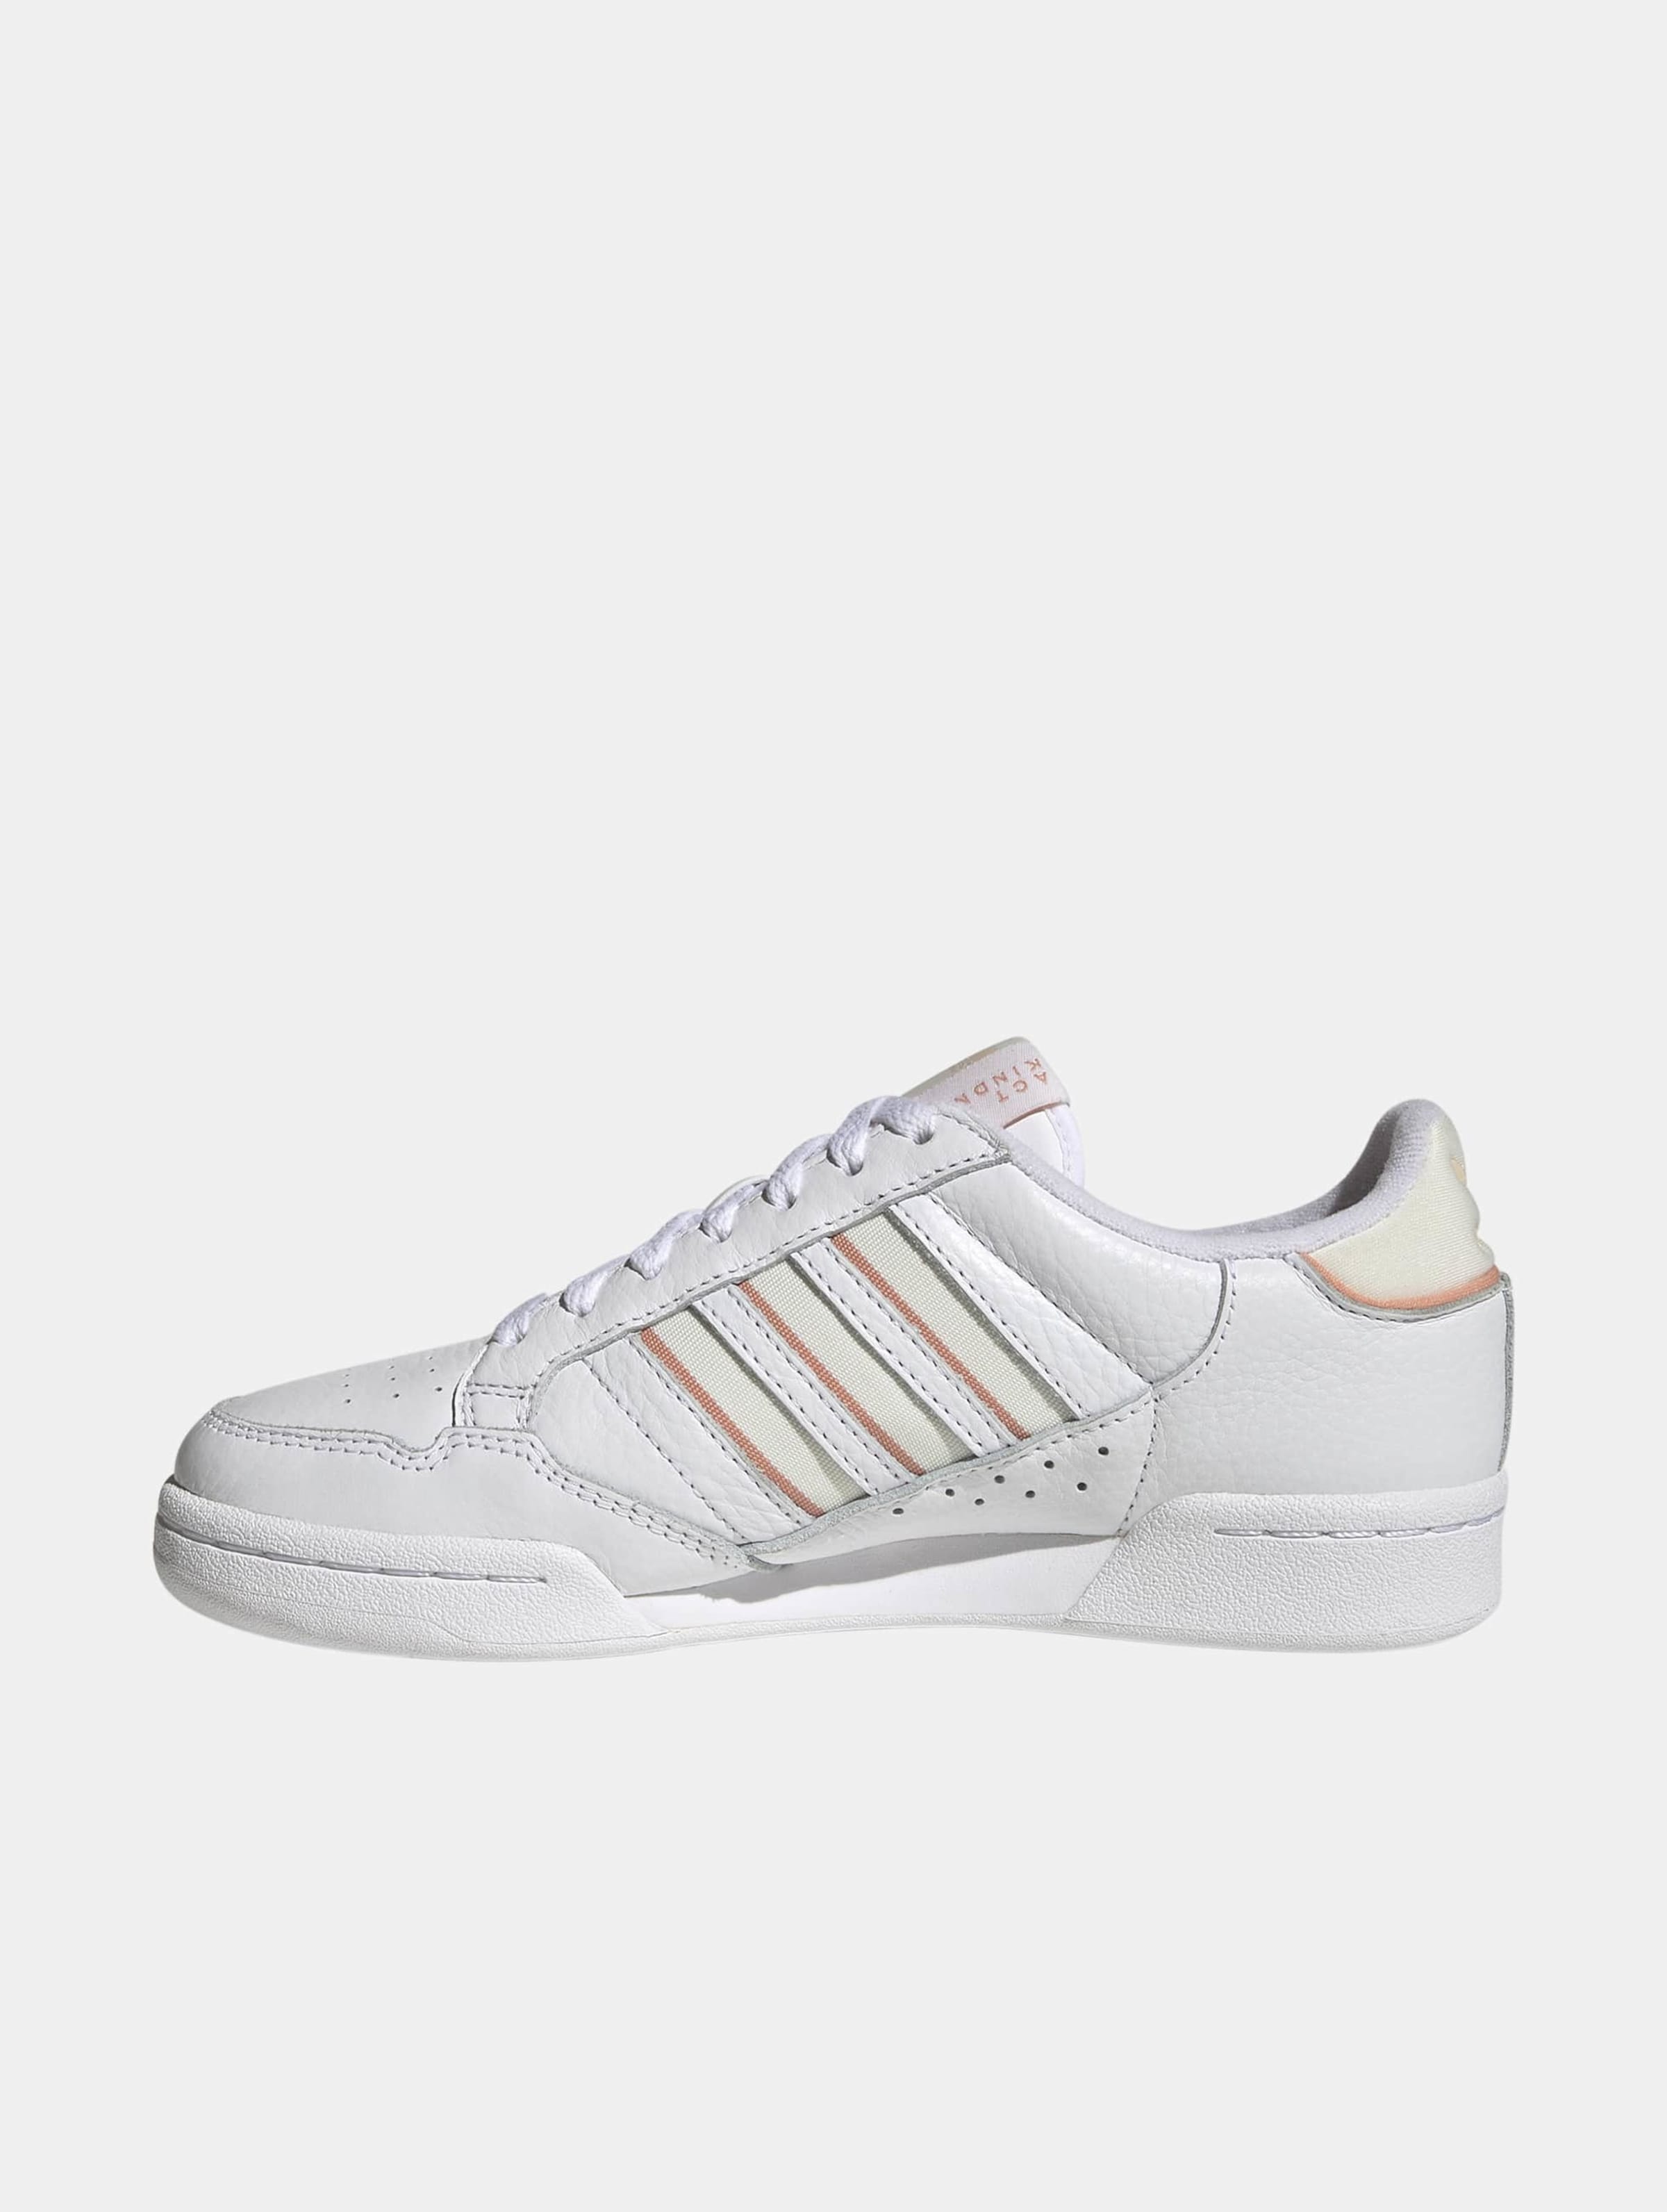 adidas Originals Adidas Continental 80 Stripes Schuhe Vrouwen op kleur wit, Maat 40